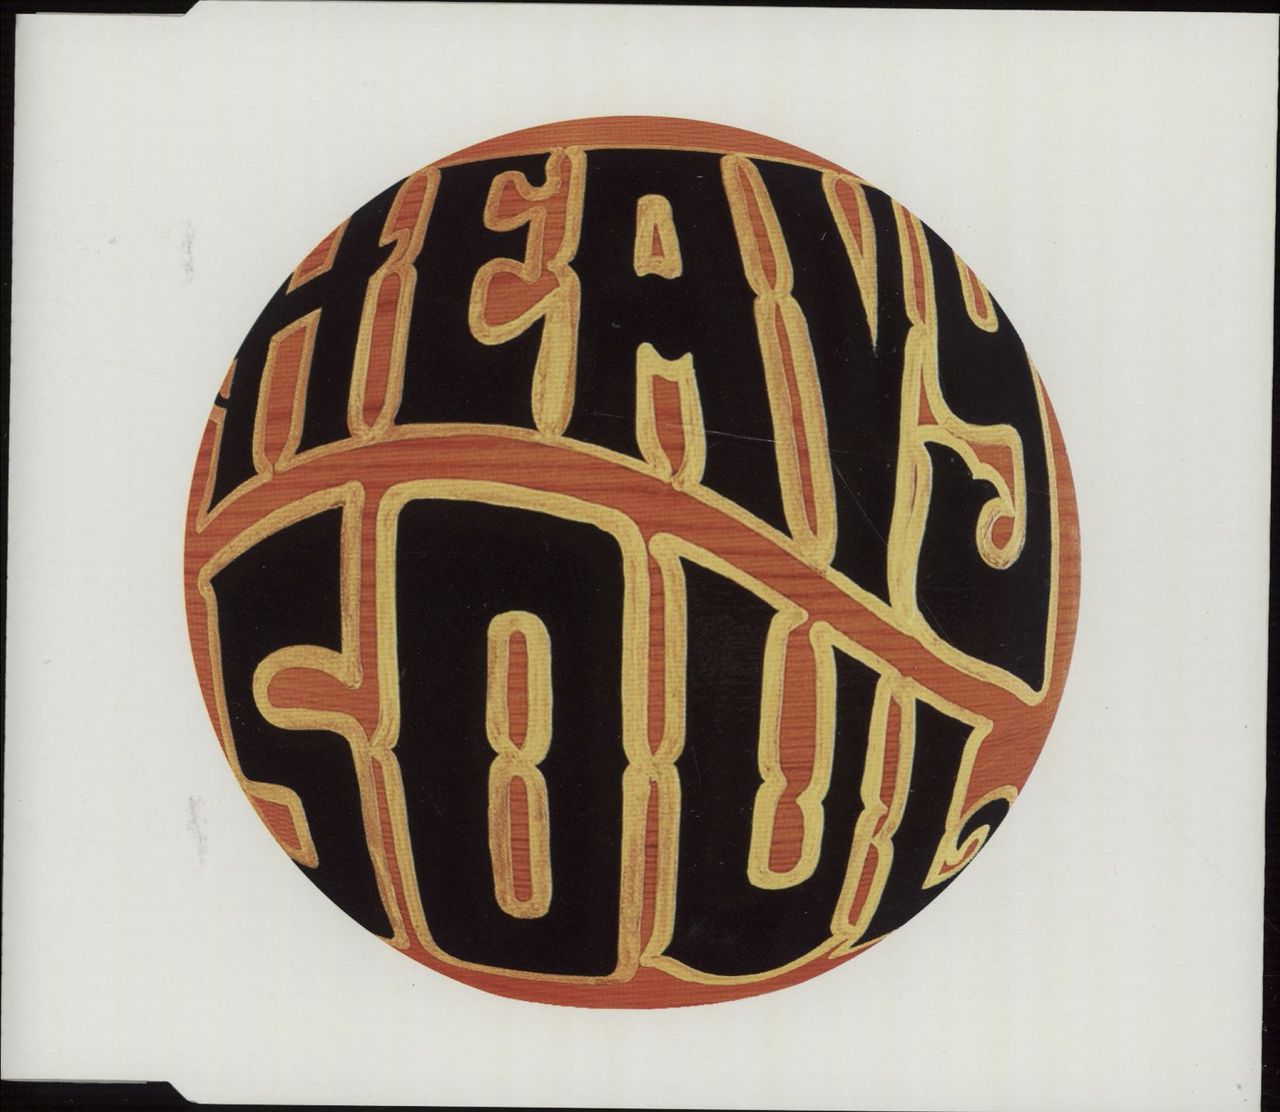 『Paul weller heavy soul』レコード